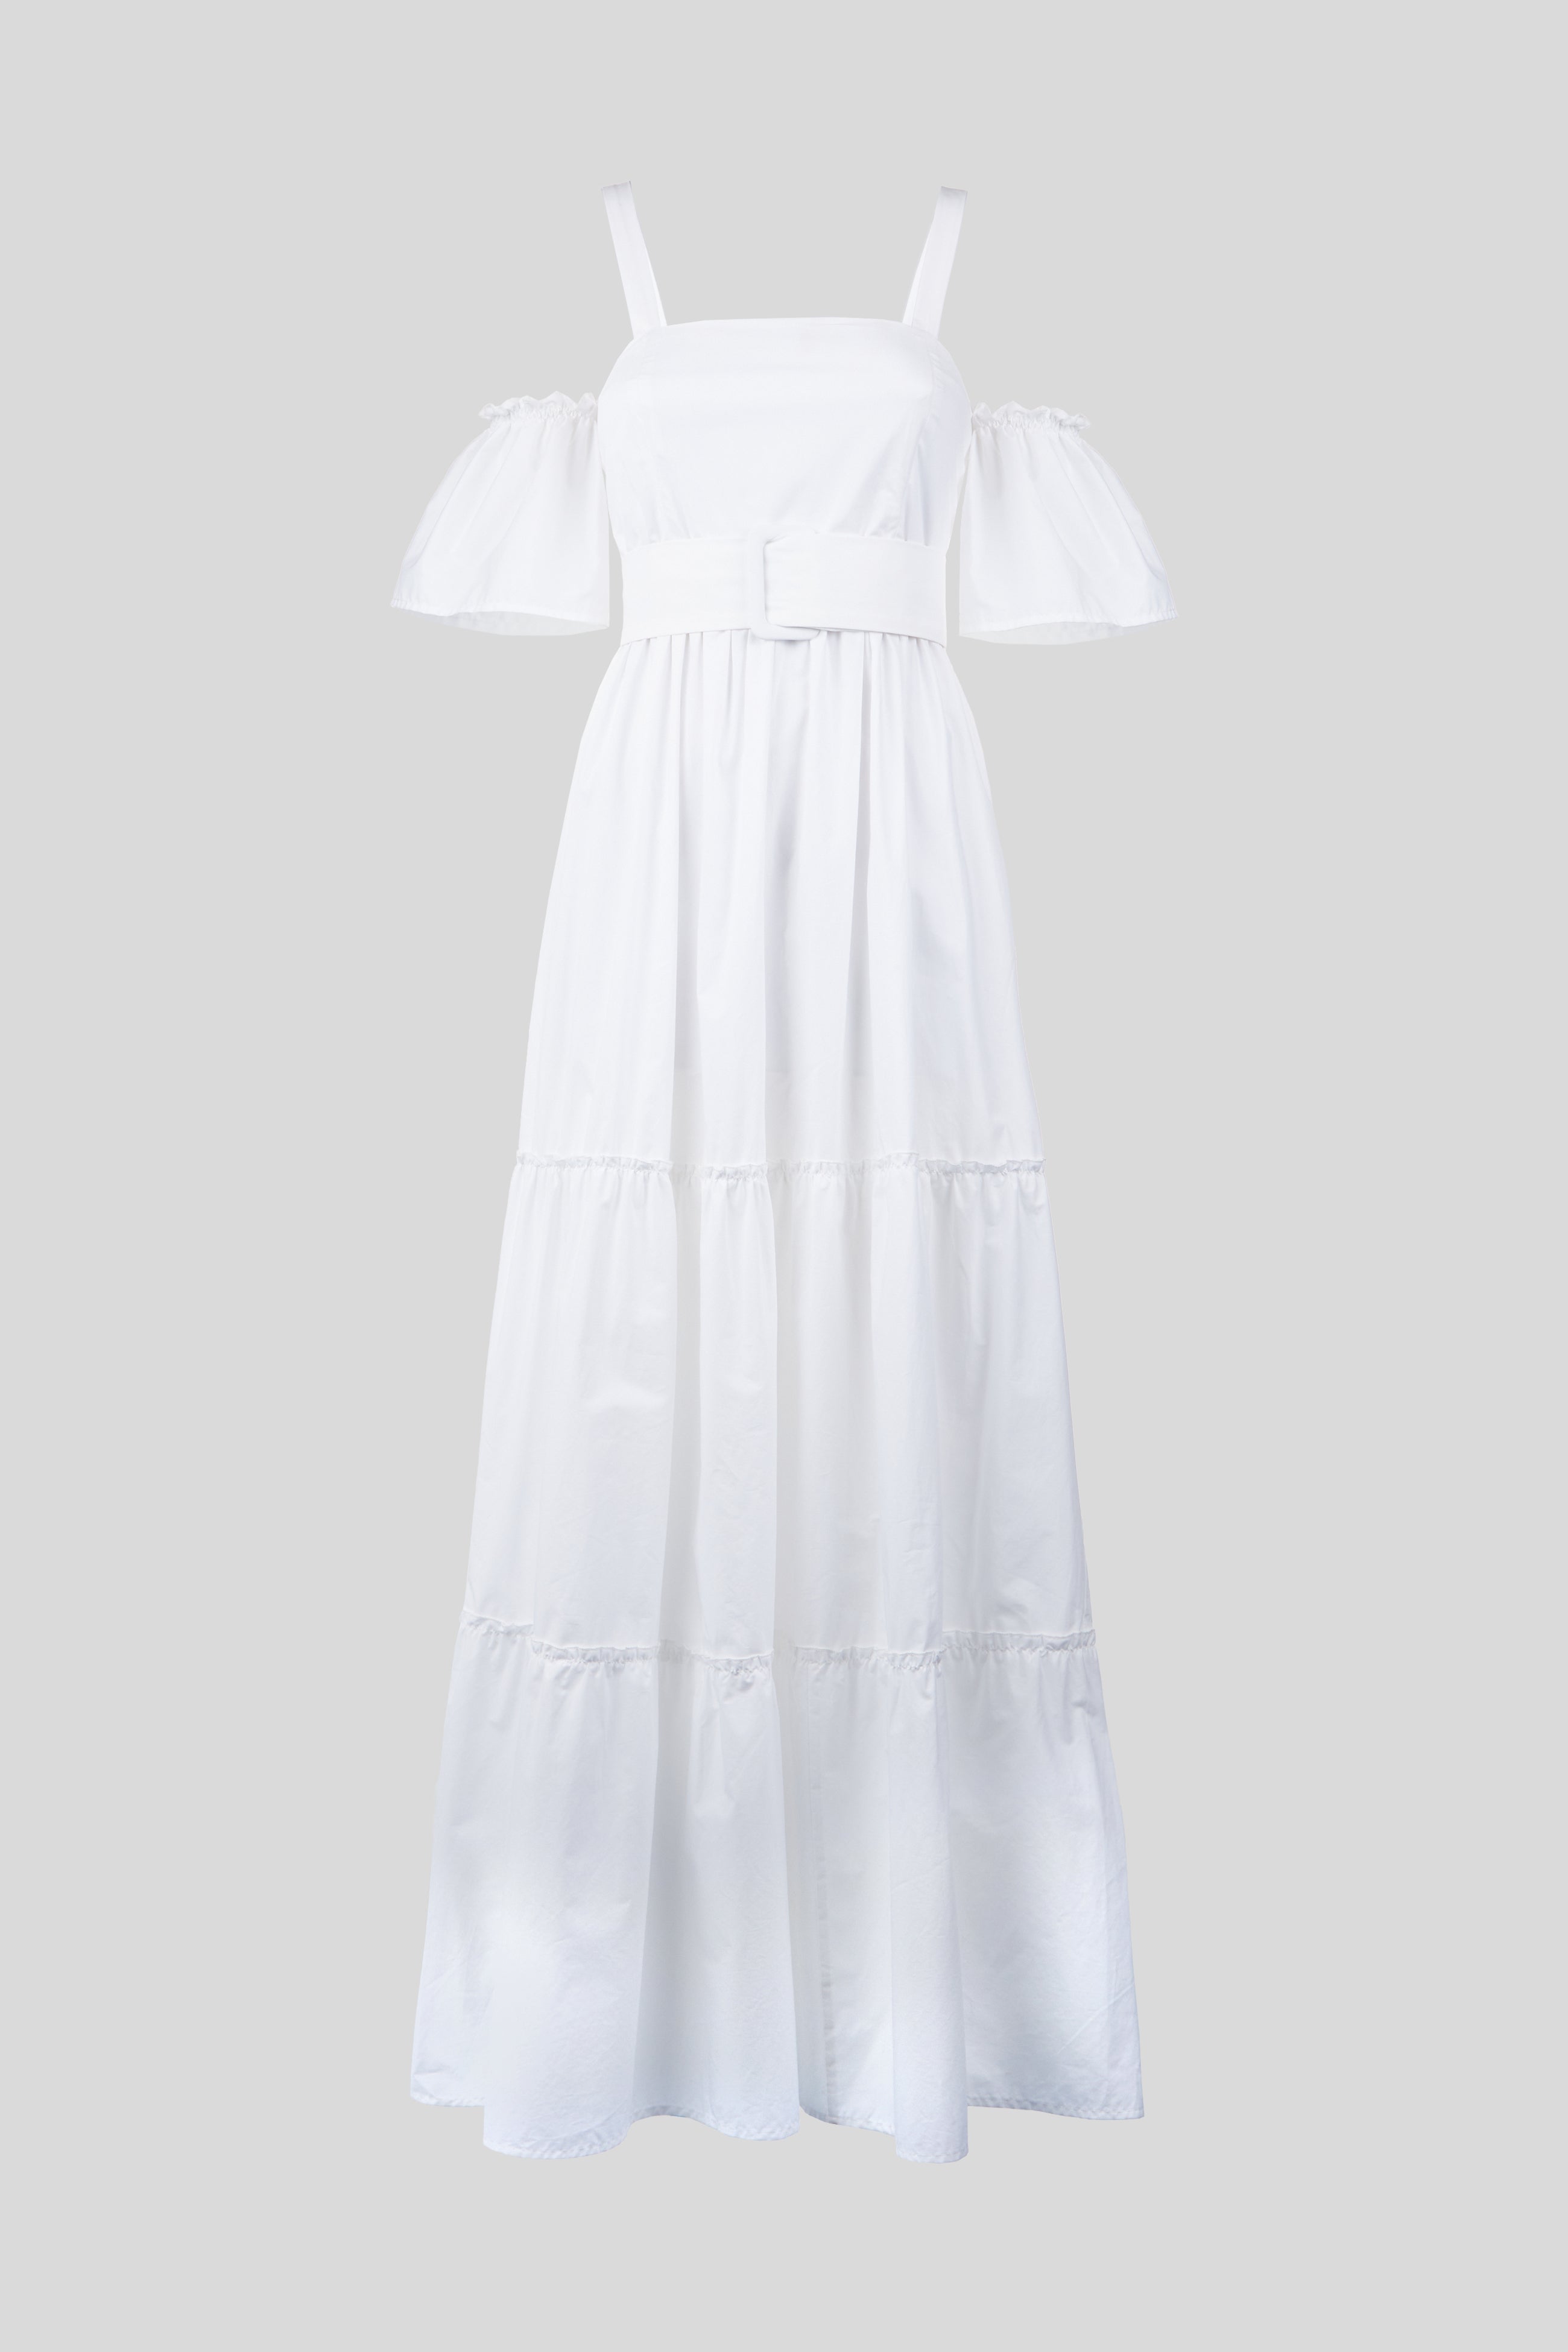 LIU JO Langes weißes Kleid